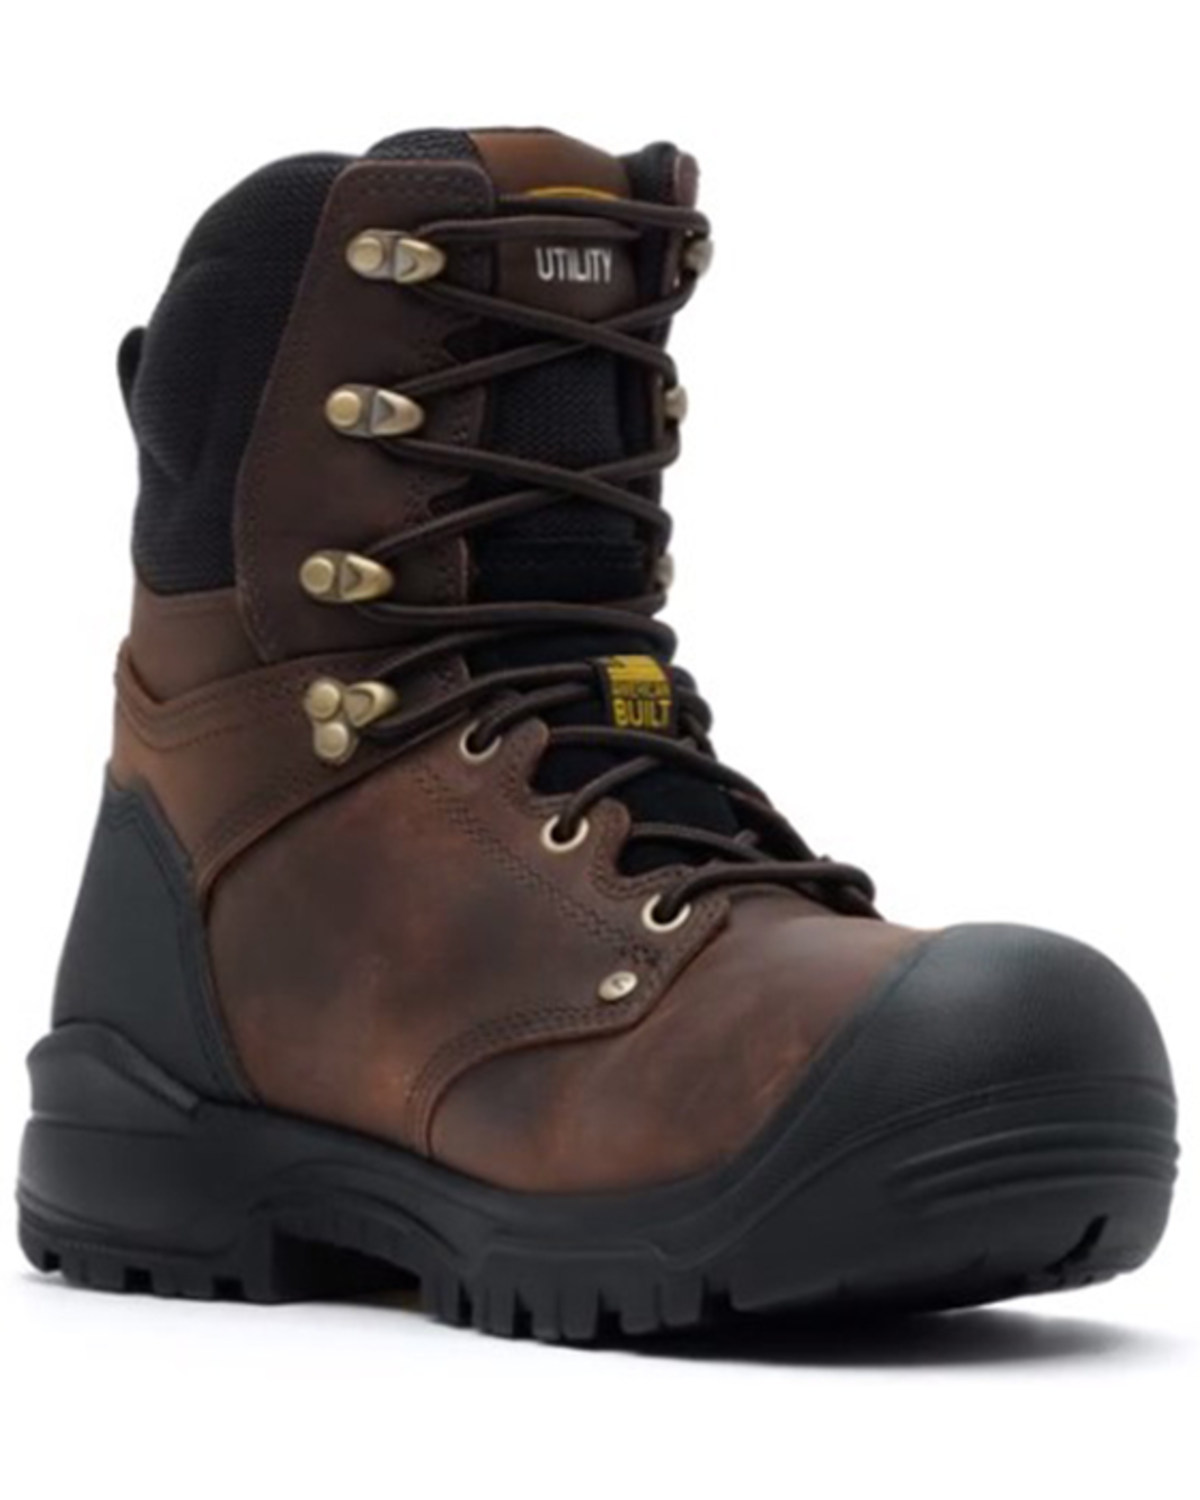 Keen Men's Independence 8" Waterproof Work Boots - Soft Toe